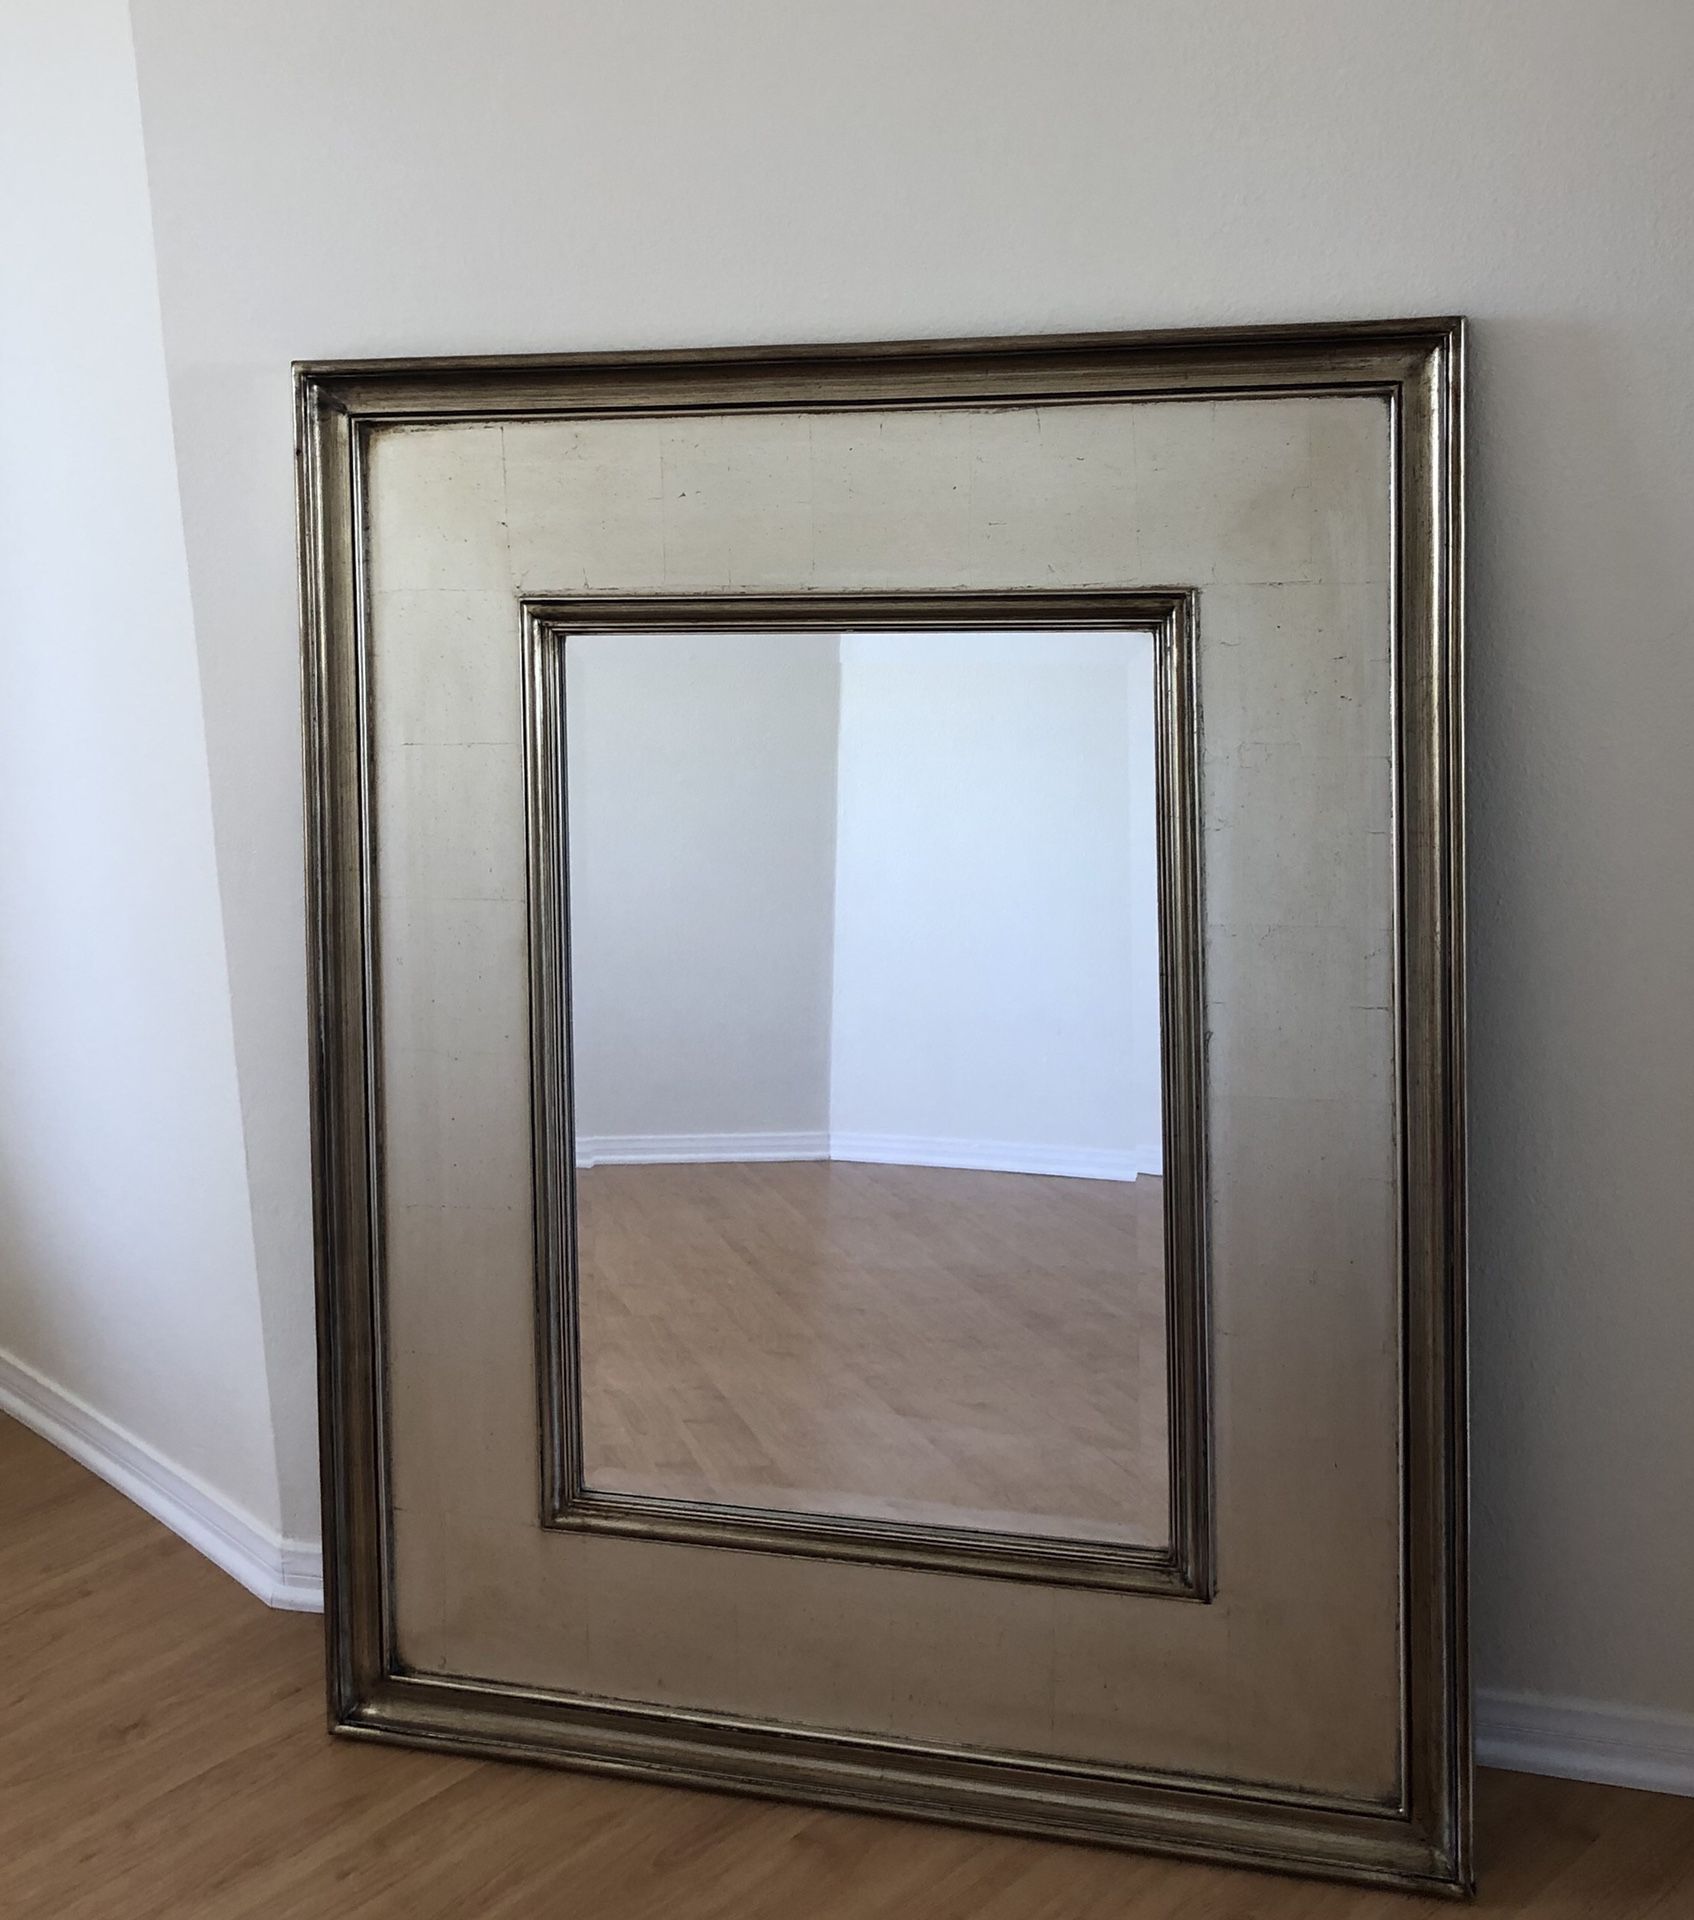 53”x43” Bassett Mirror Company Wall Mirror